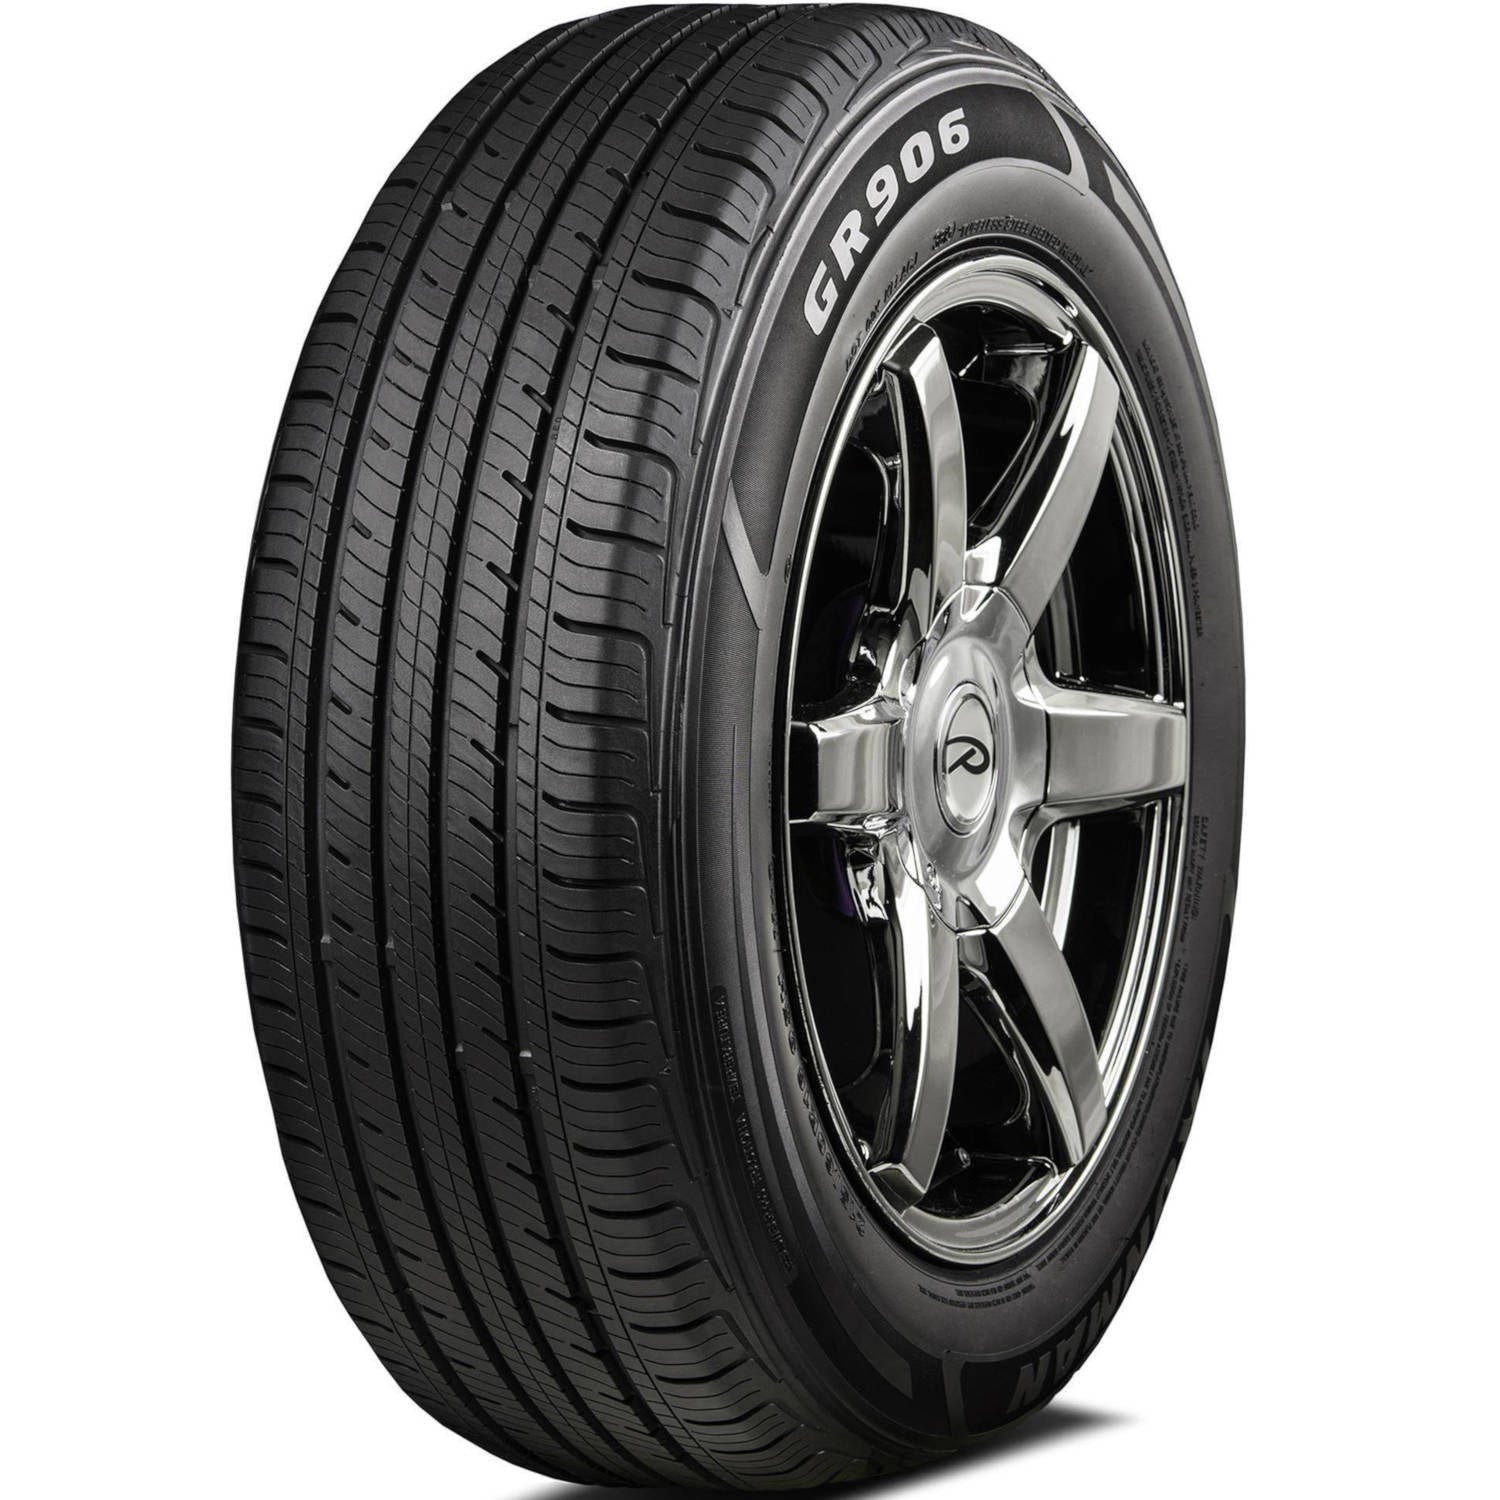 IRONMAN GR906 215/65R17 (28X8.5R 17) Tires